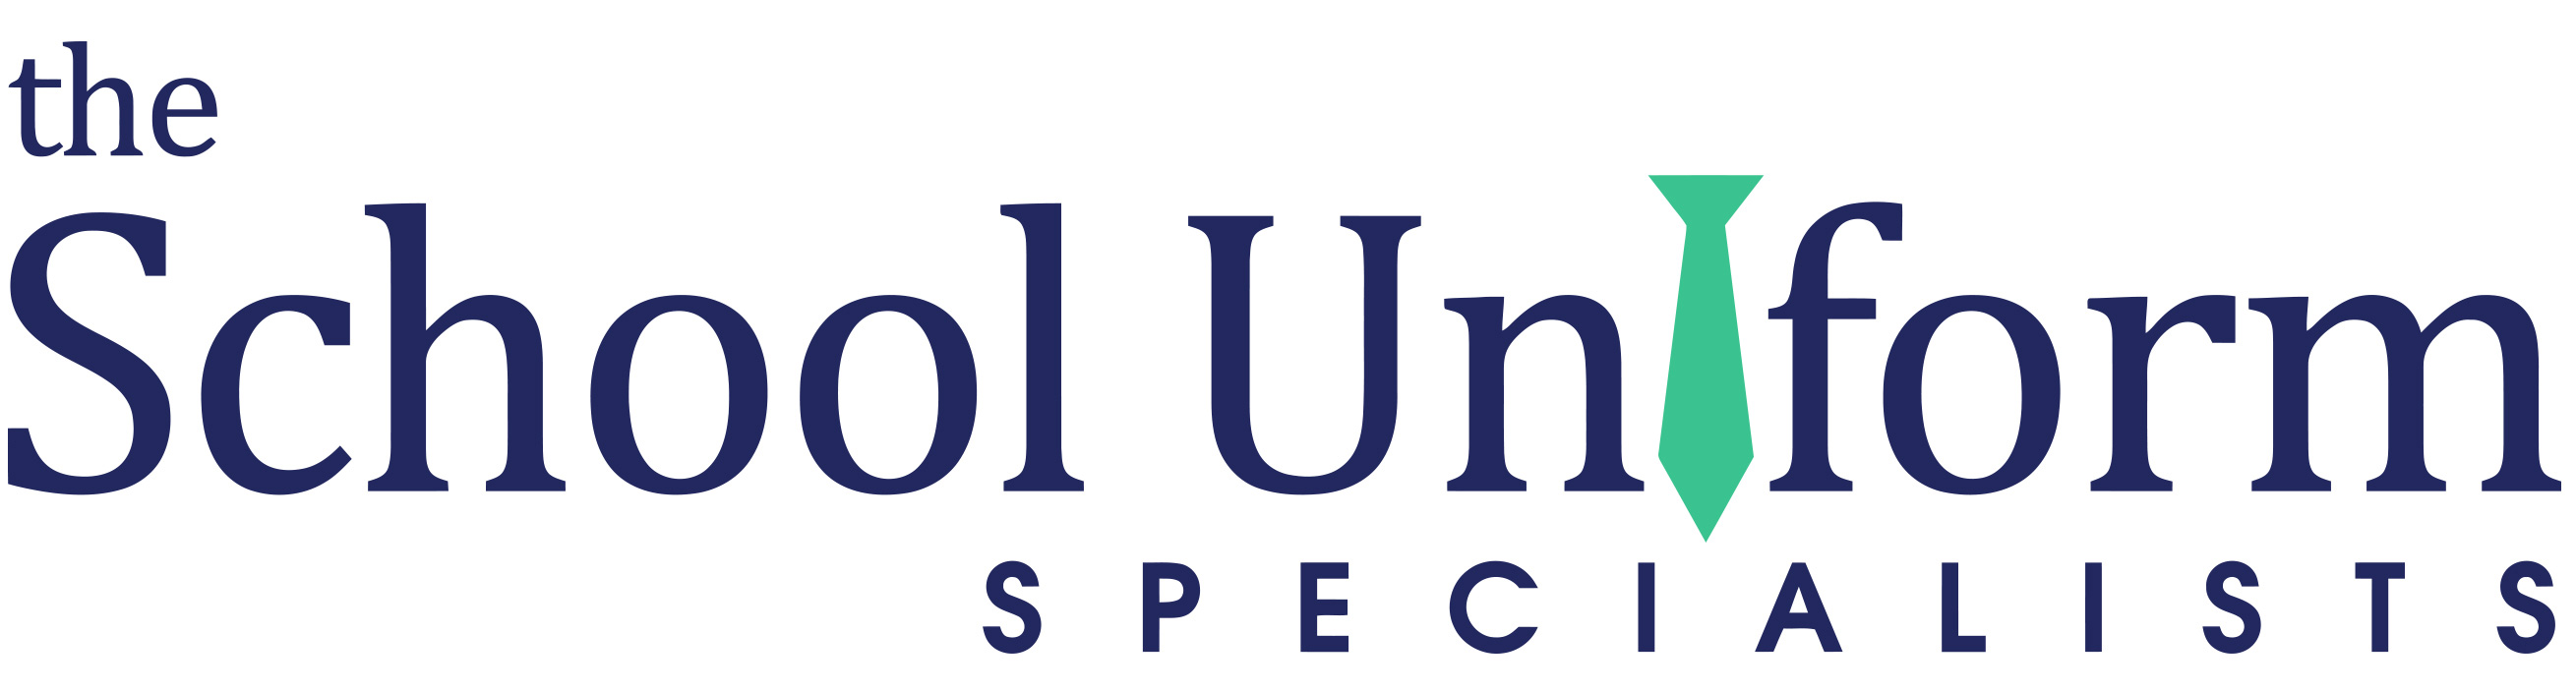 The School Uniform Specialists logo